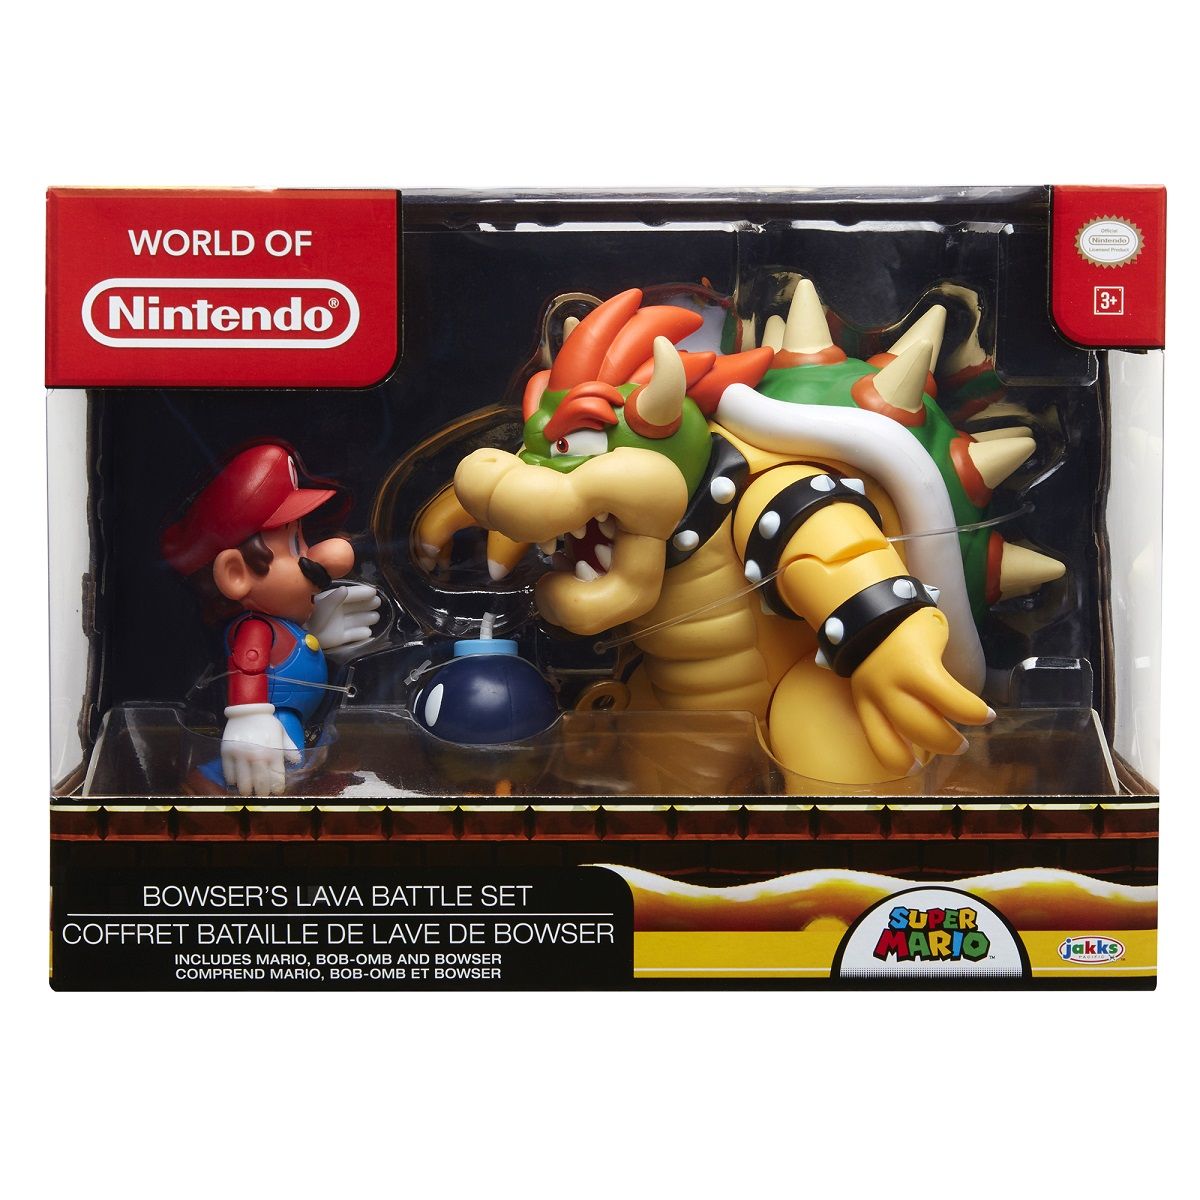 Coffret Figurines Nintendo Mario et Bowser SUPER MARIO : la boite